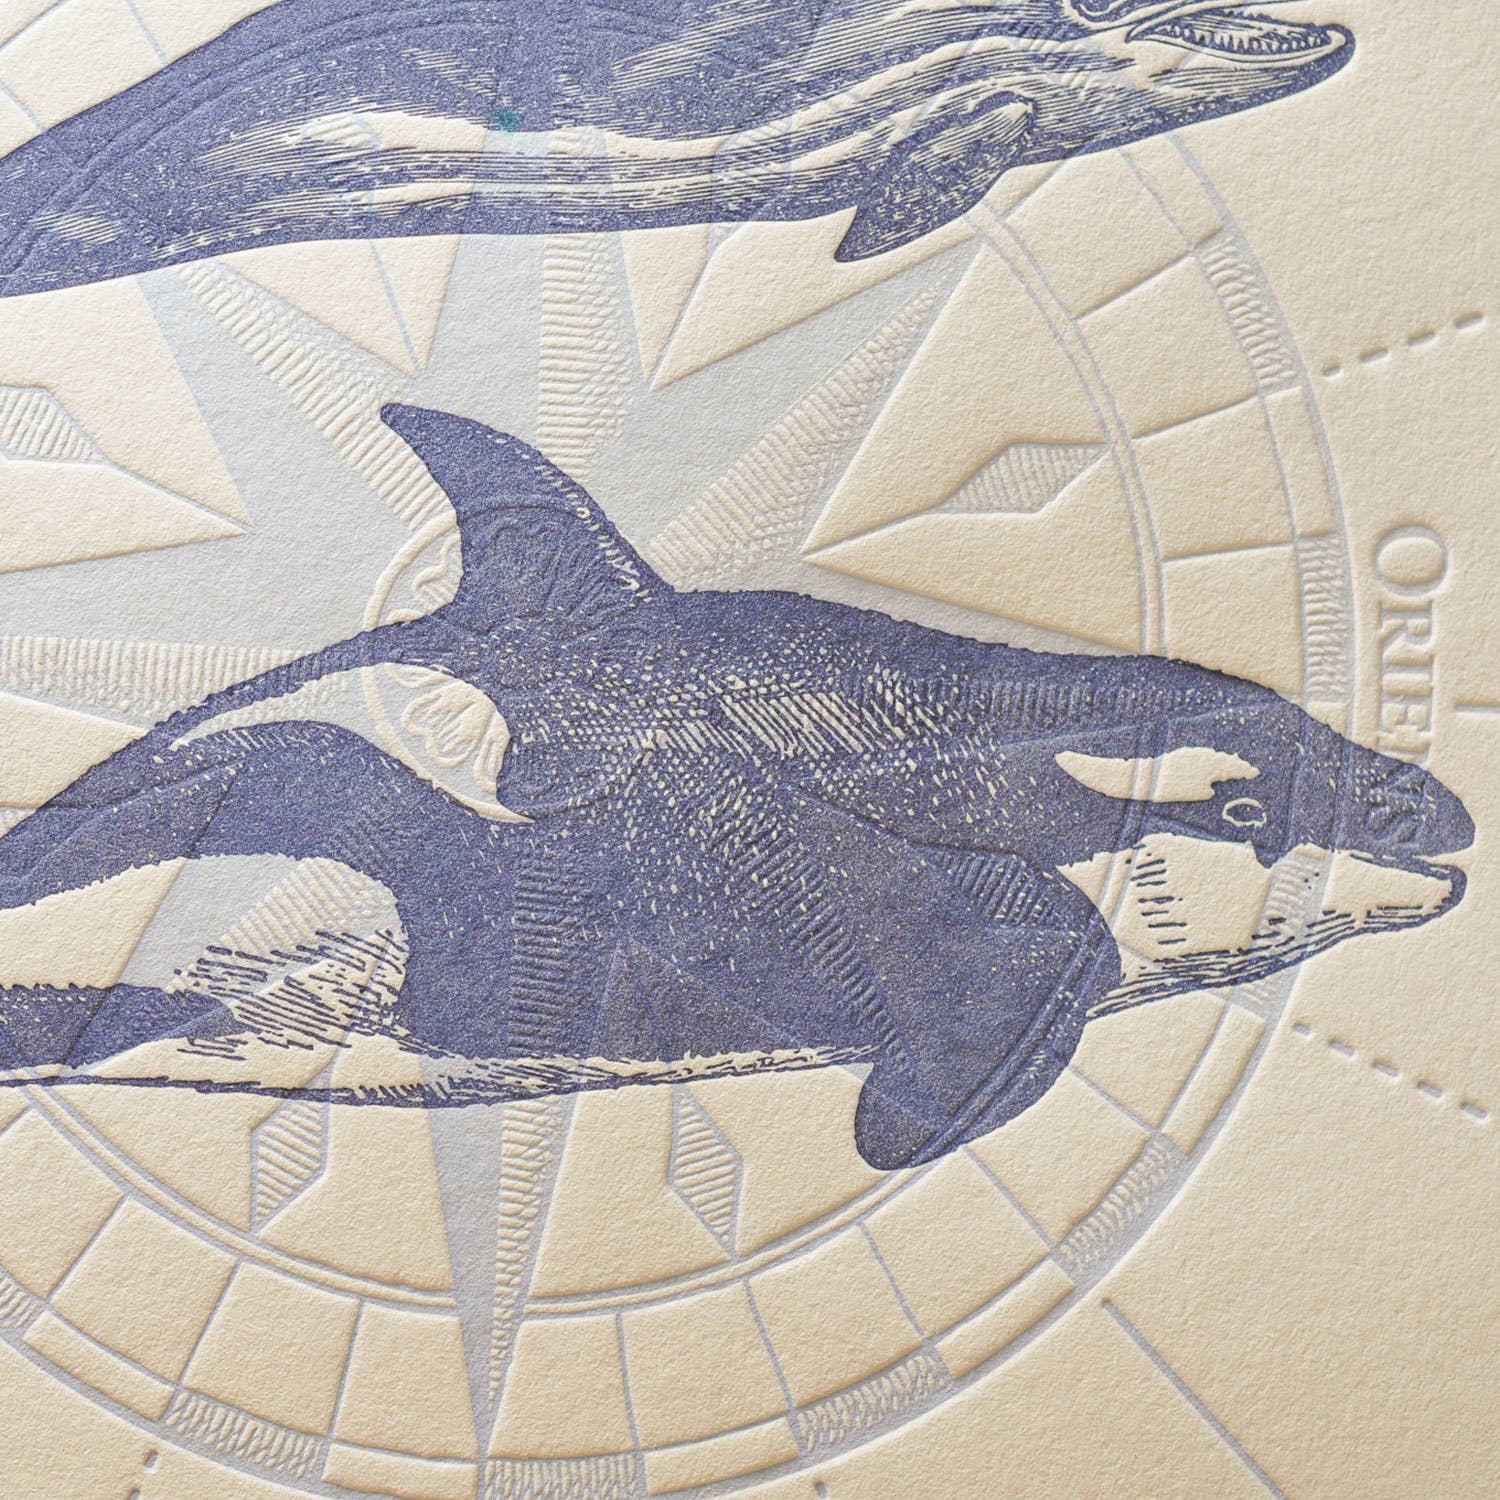 Art Print Marine Mammals from Oceania by L'Atelier Letterpress - Harold&Charles